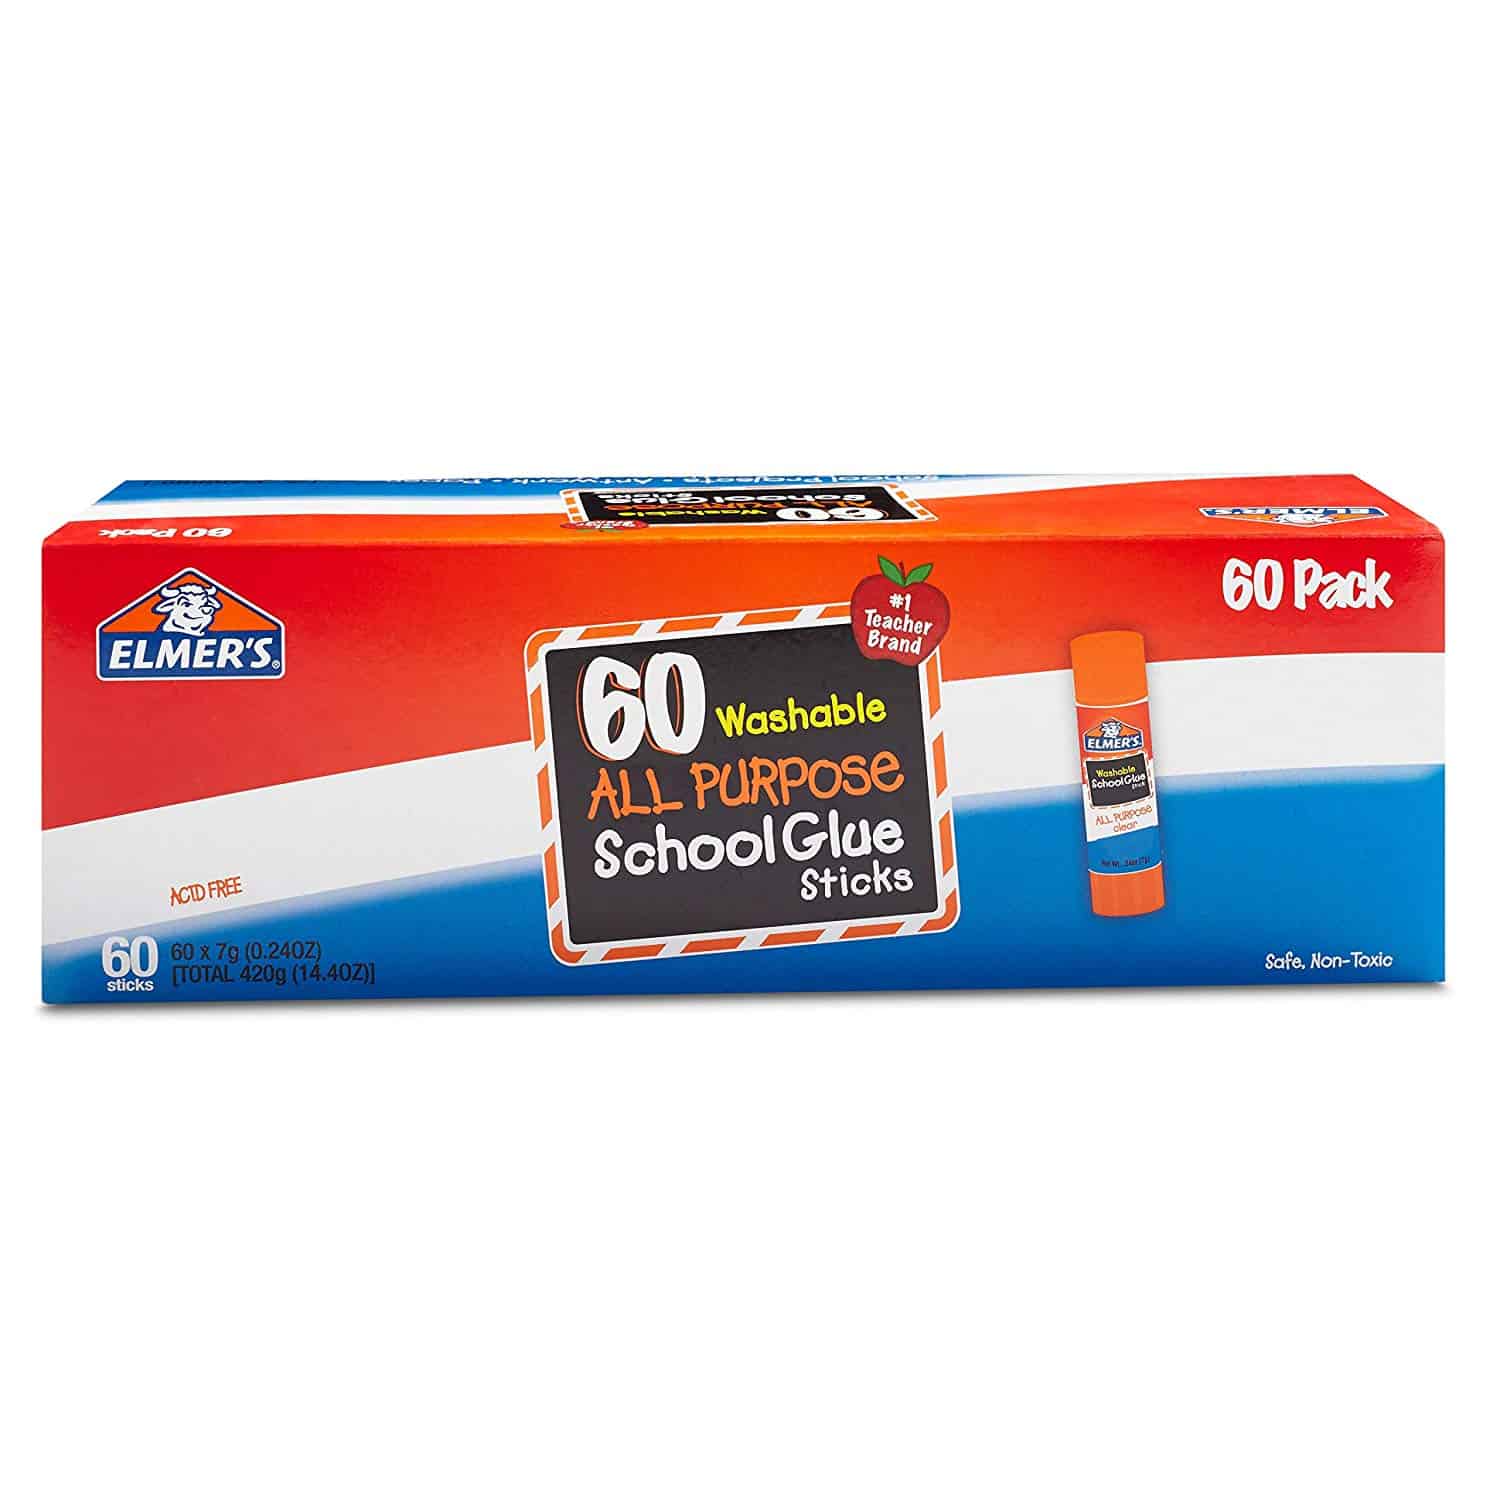 60 PC Elmer’s All Purpose School Glue Sticks $14.87 (Reg $37.76)